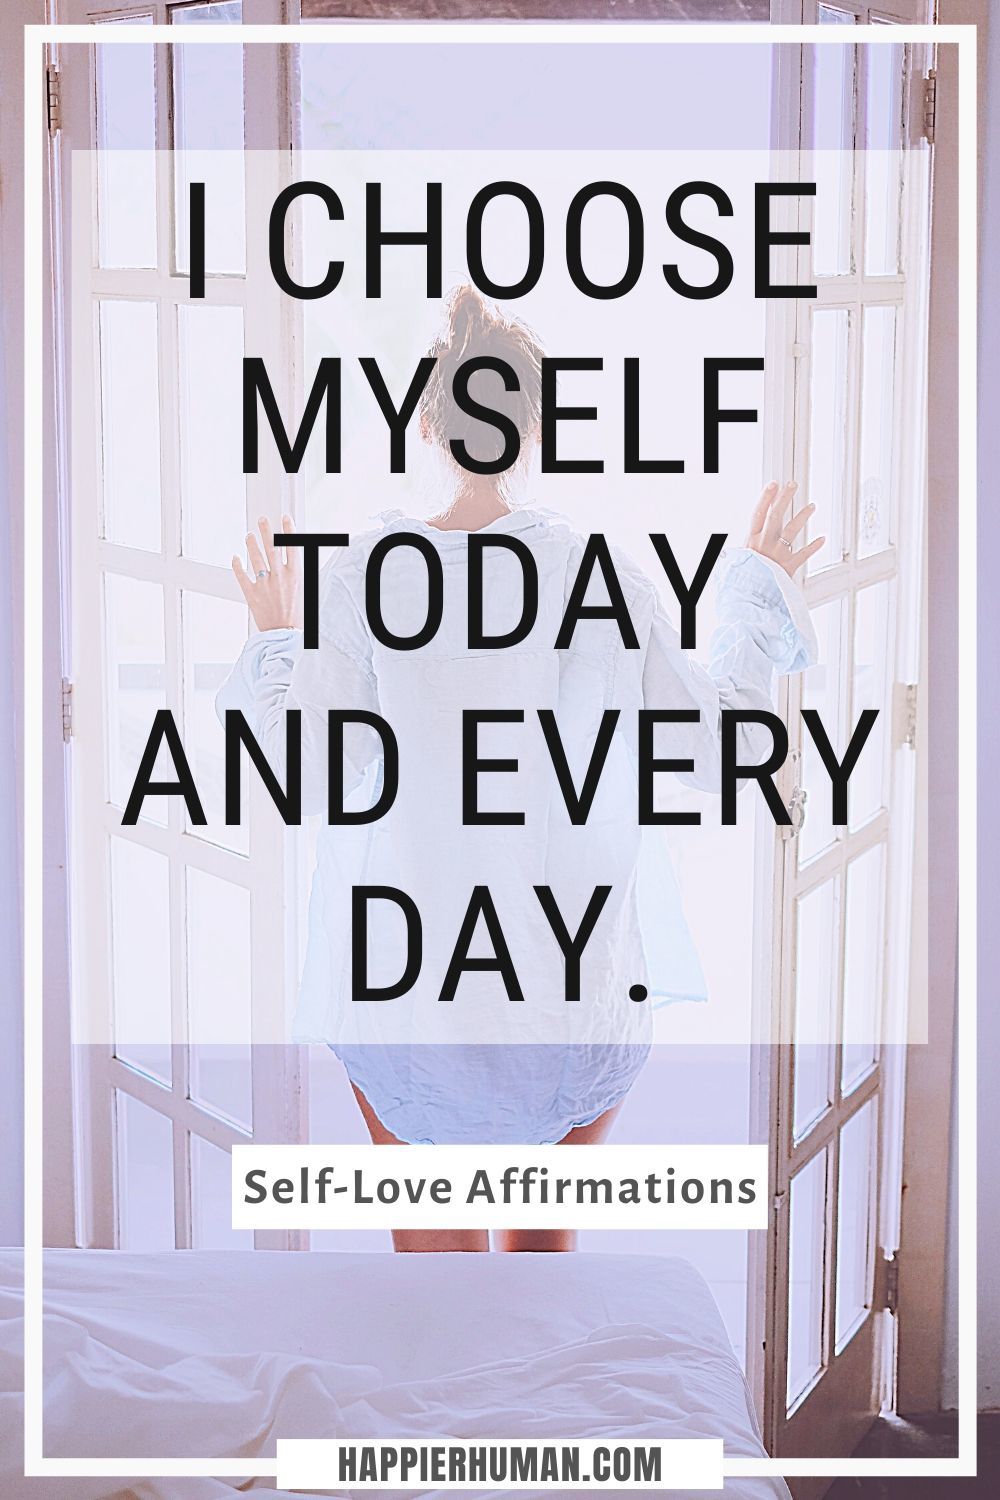 Self Love Affirmations - “I choose myself today and every day.” | self love affirmations youtube | self love affirmations 2020 | daily self love affirmations app #dailyaffirmations #affirmationstoactions #positivity